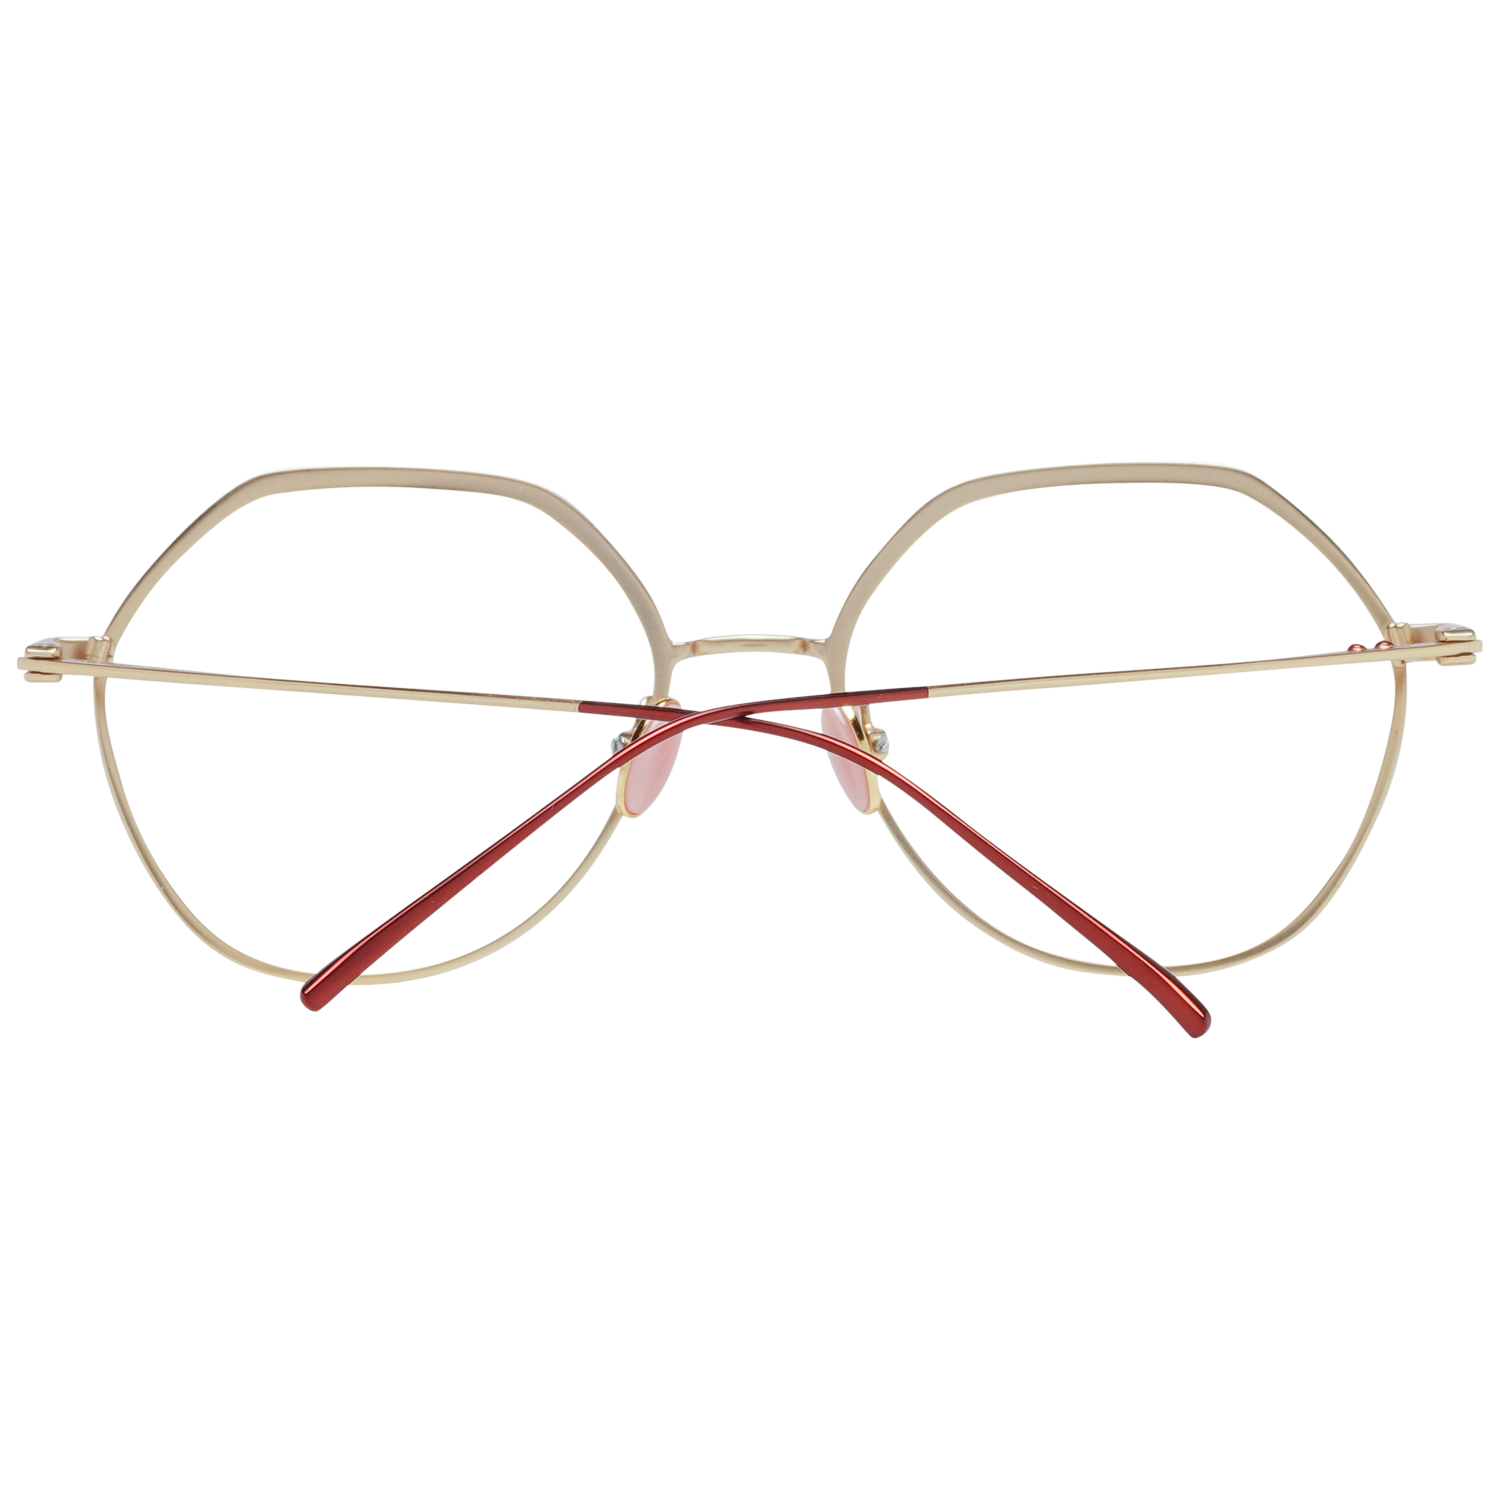 Scotch & Soda Frames Scotch & Soda Optical Frame Prescription Glasses SS1001 900 52 Eyeglasses Eyewear UK USA Australia 